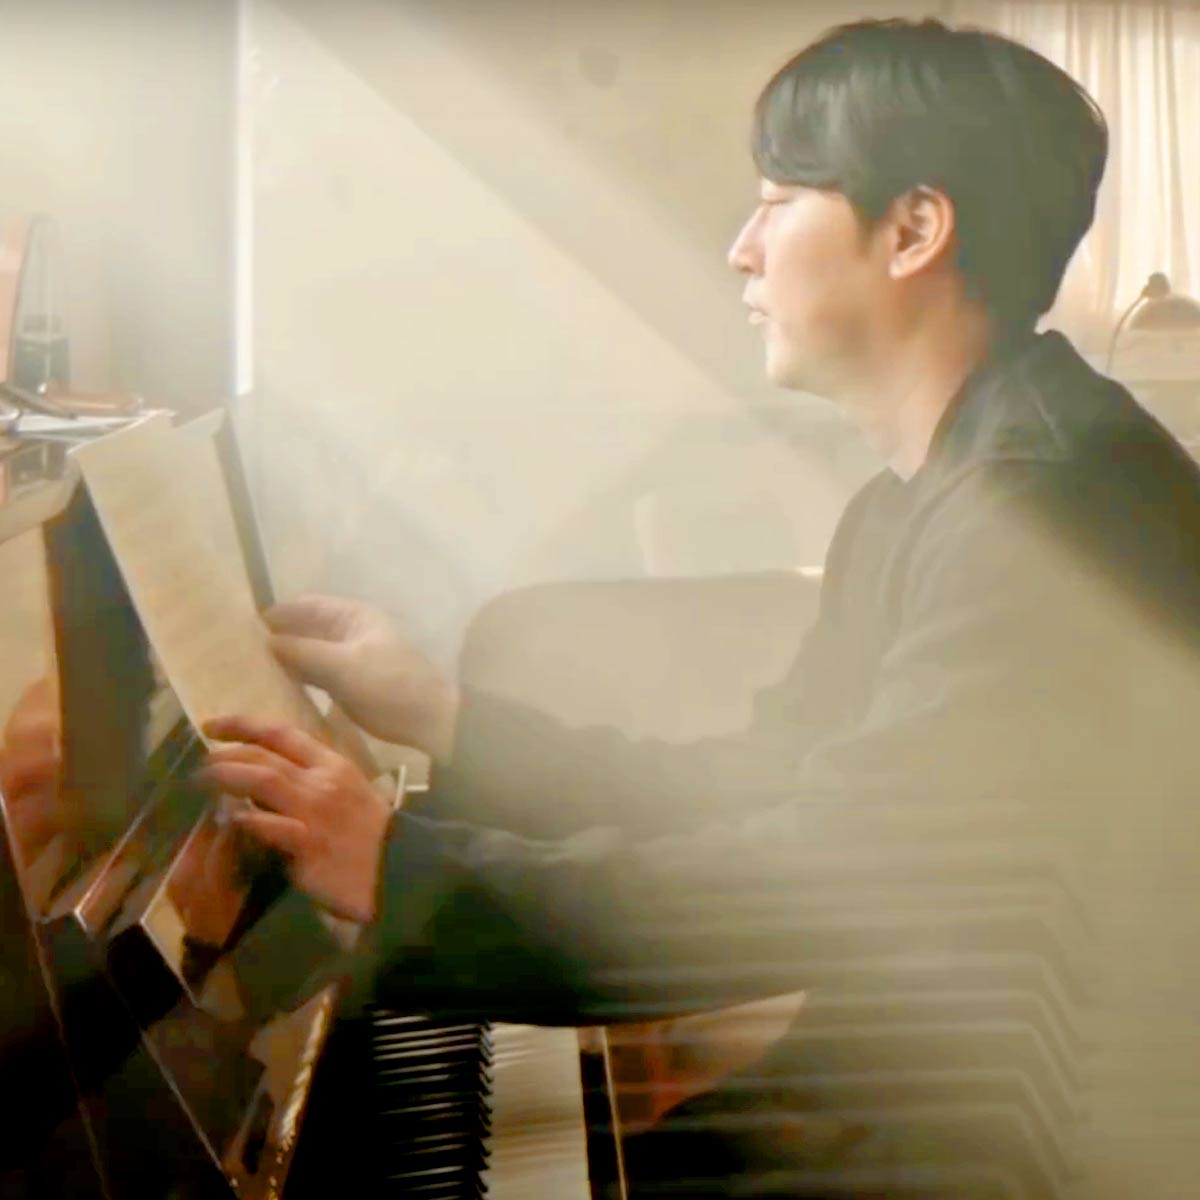 Play May Be By Yiruma Piano Music Sheet On Virtual Piano - youtube how to play roblox piano sheet music